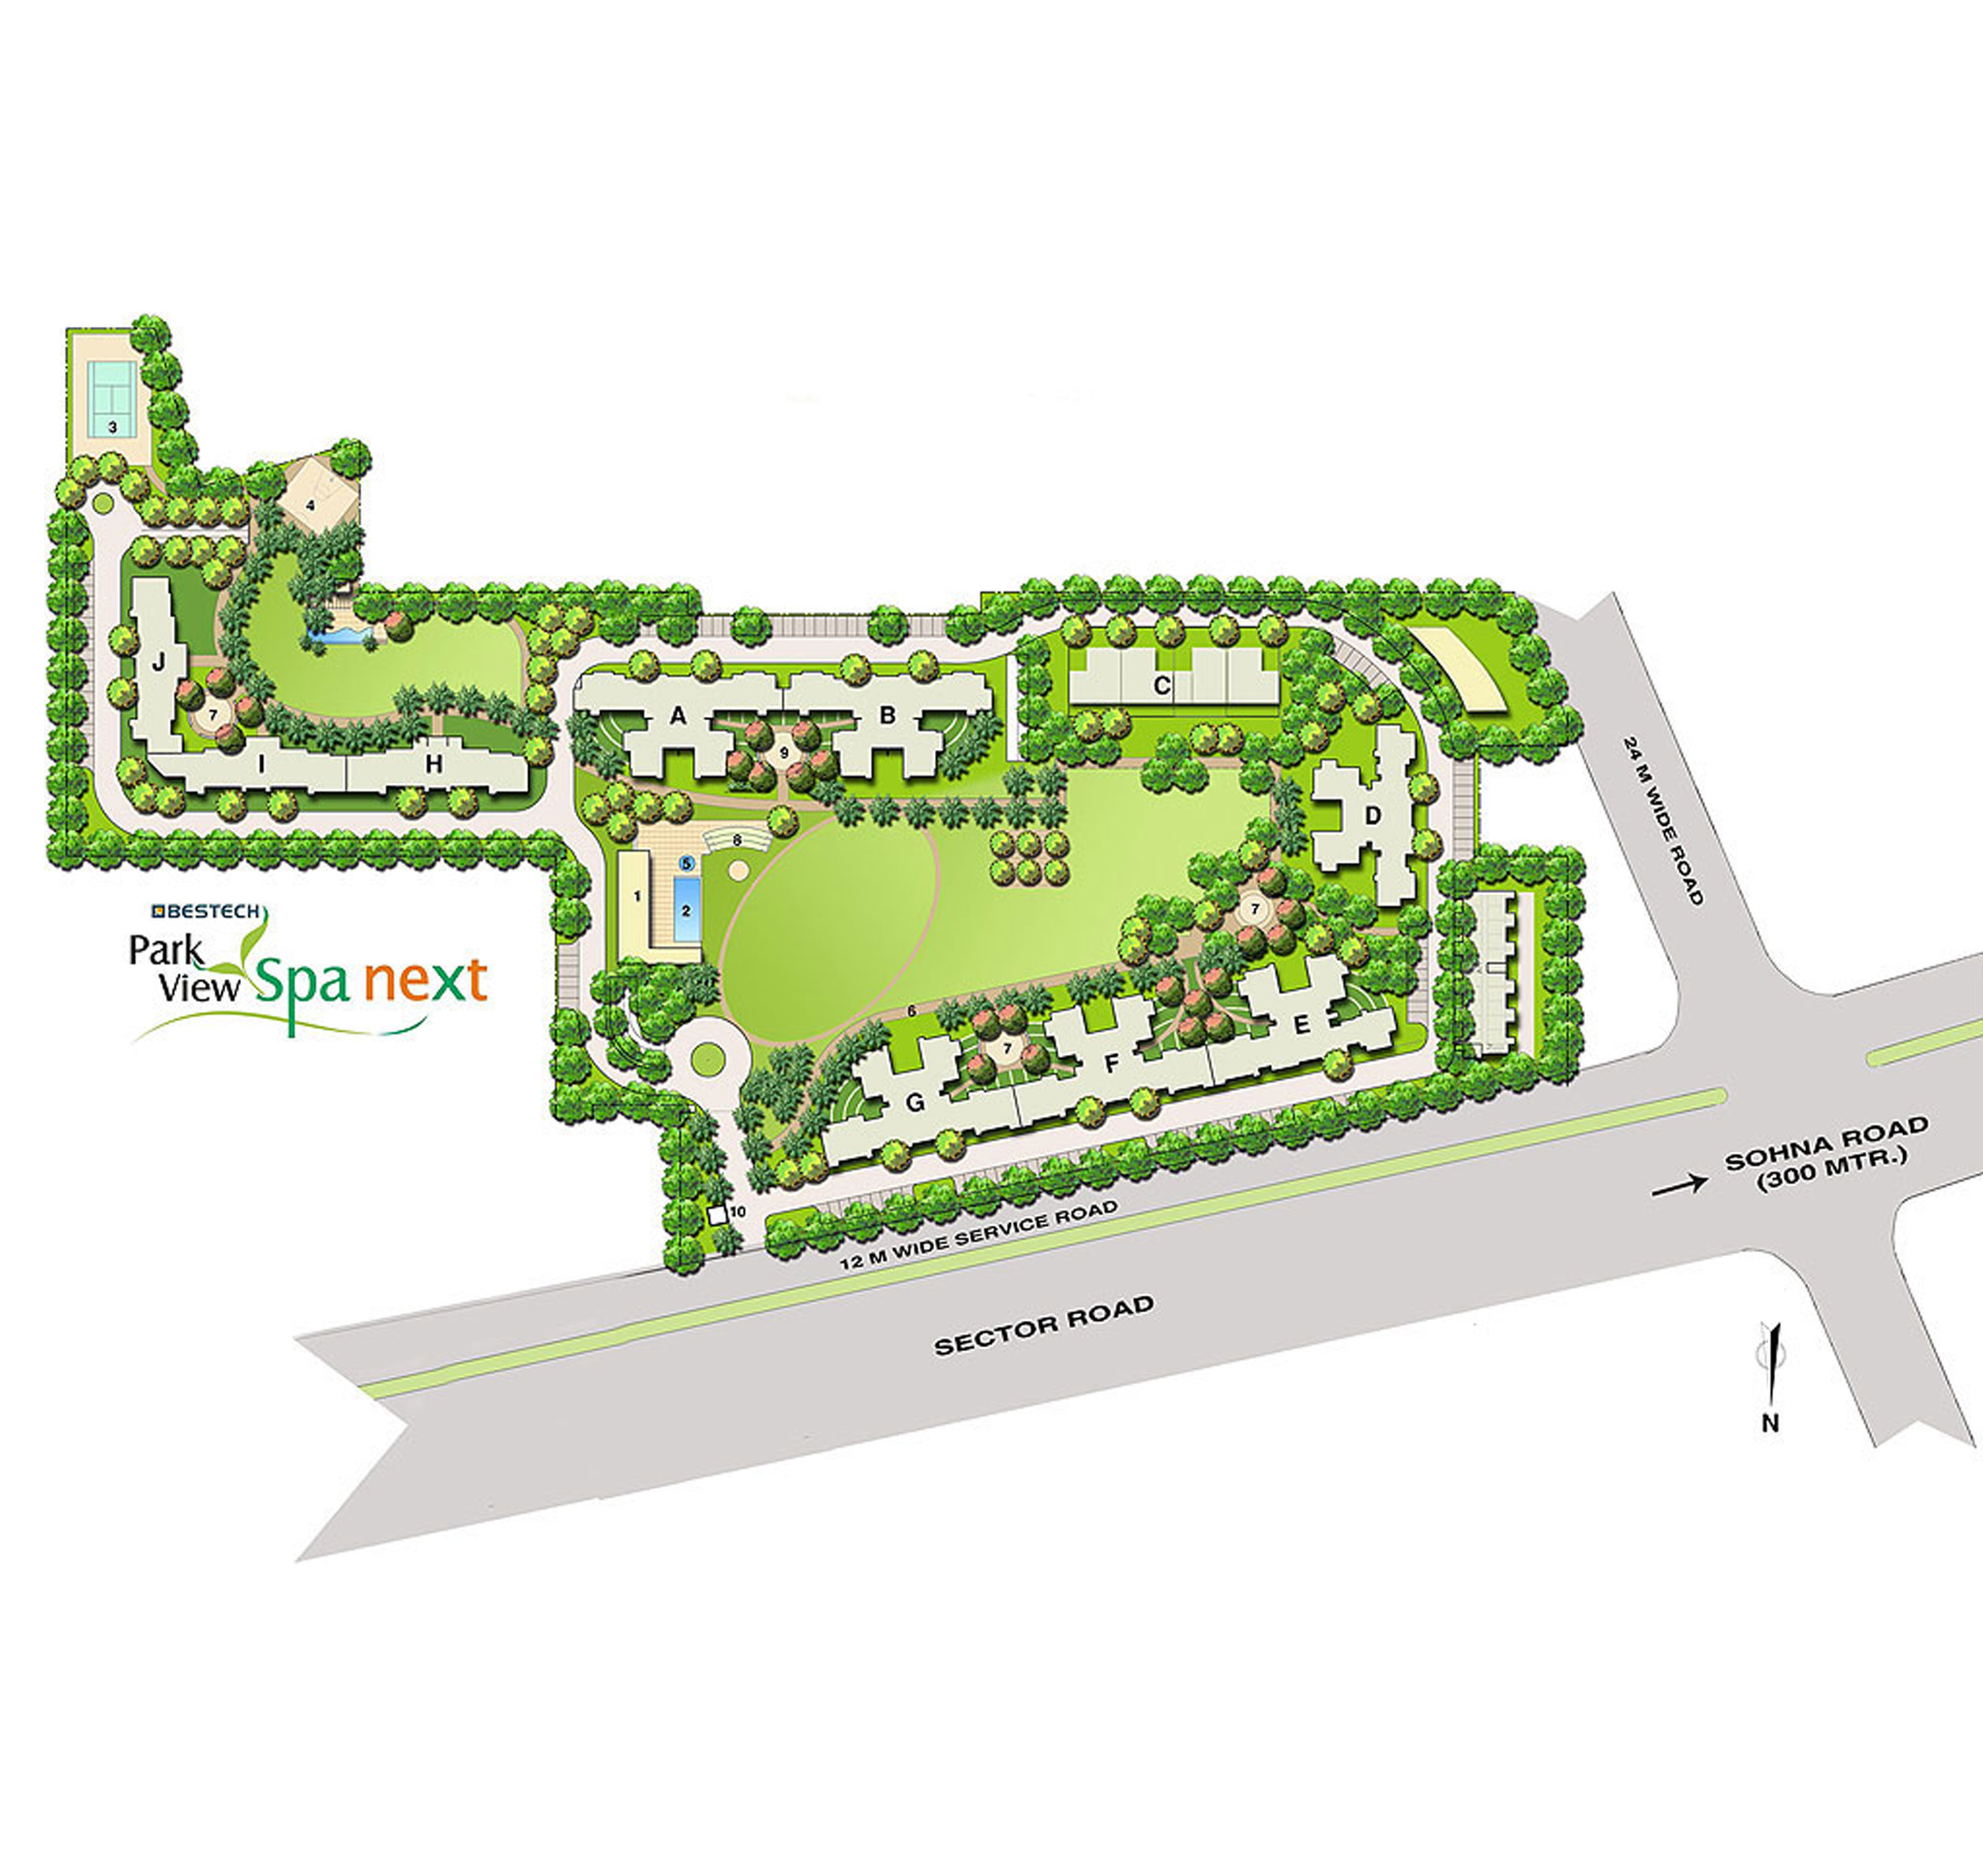 Bestech Park View Spa Next Master Plan